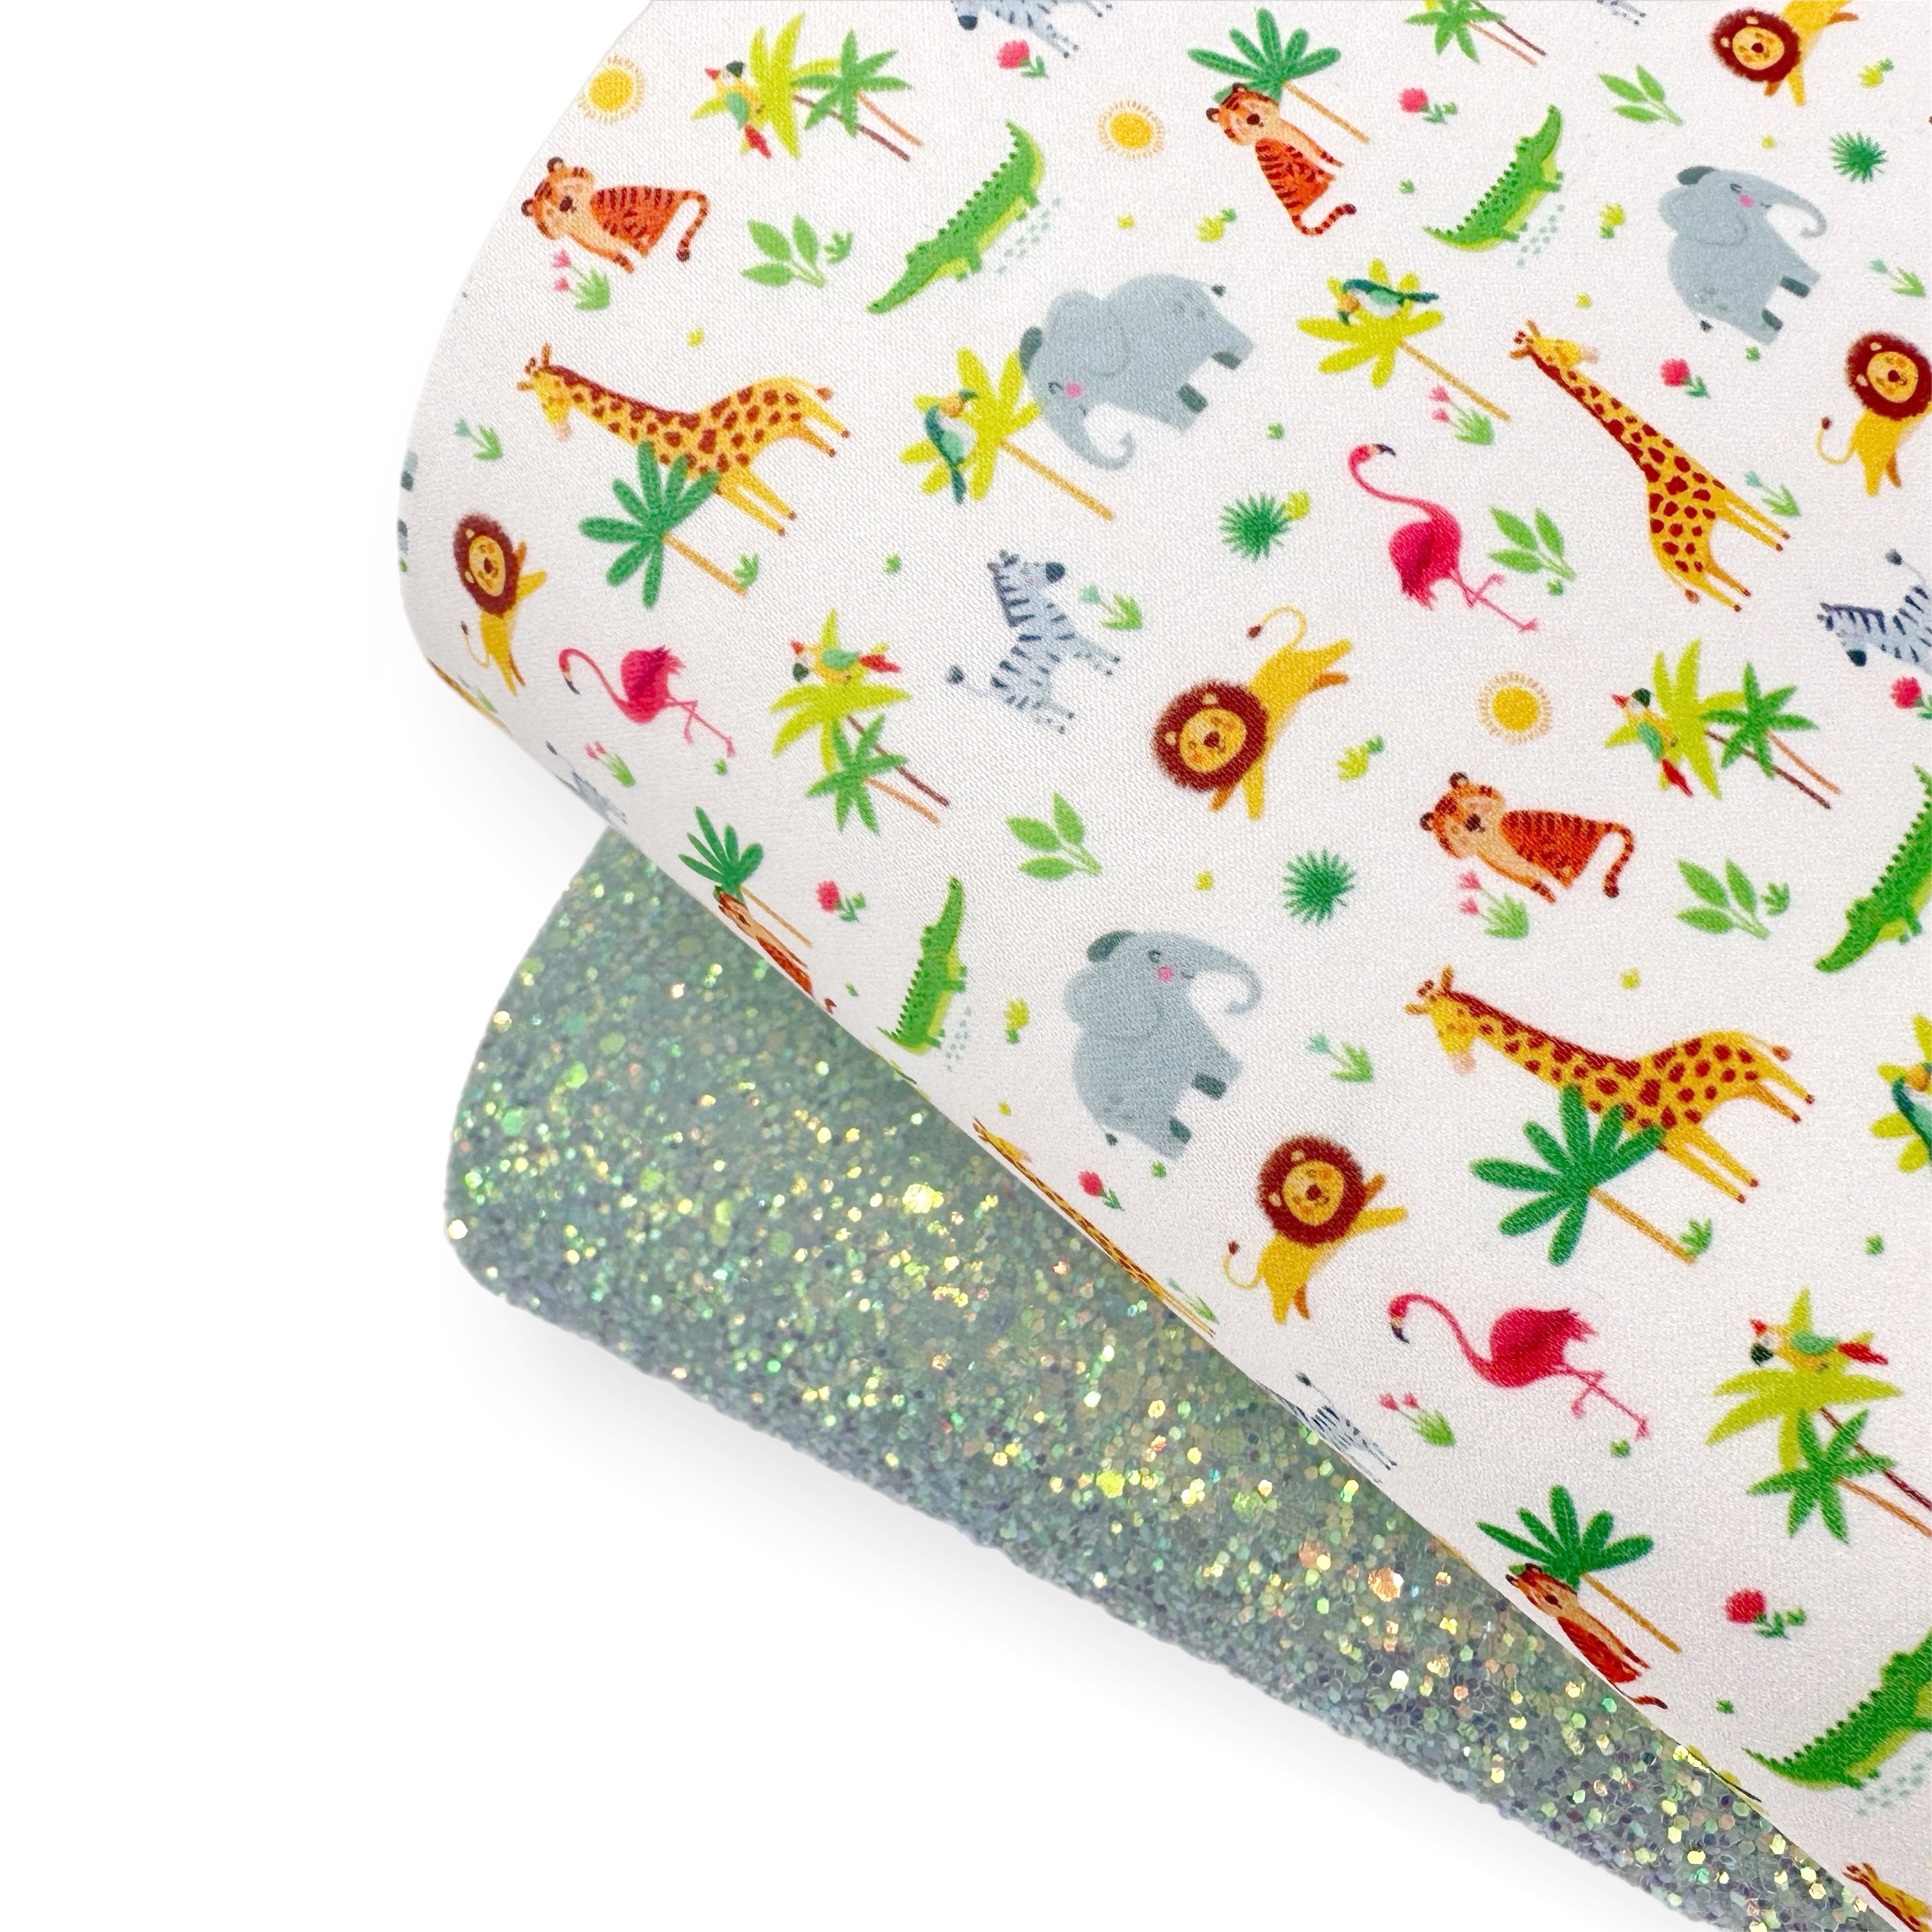 Little Zoo Babies- Felt, Suede, Velvet or Satin Premium Fabric Sheets